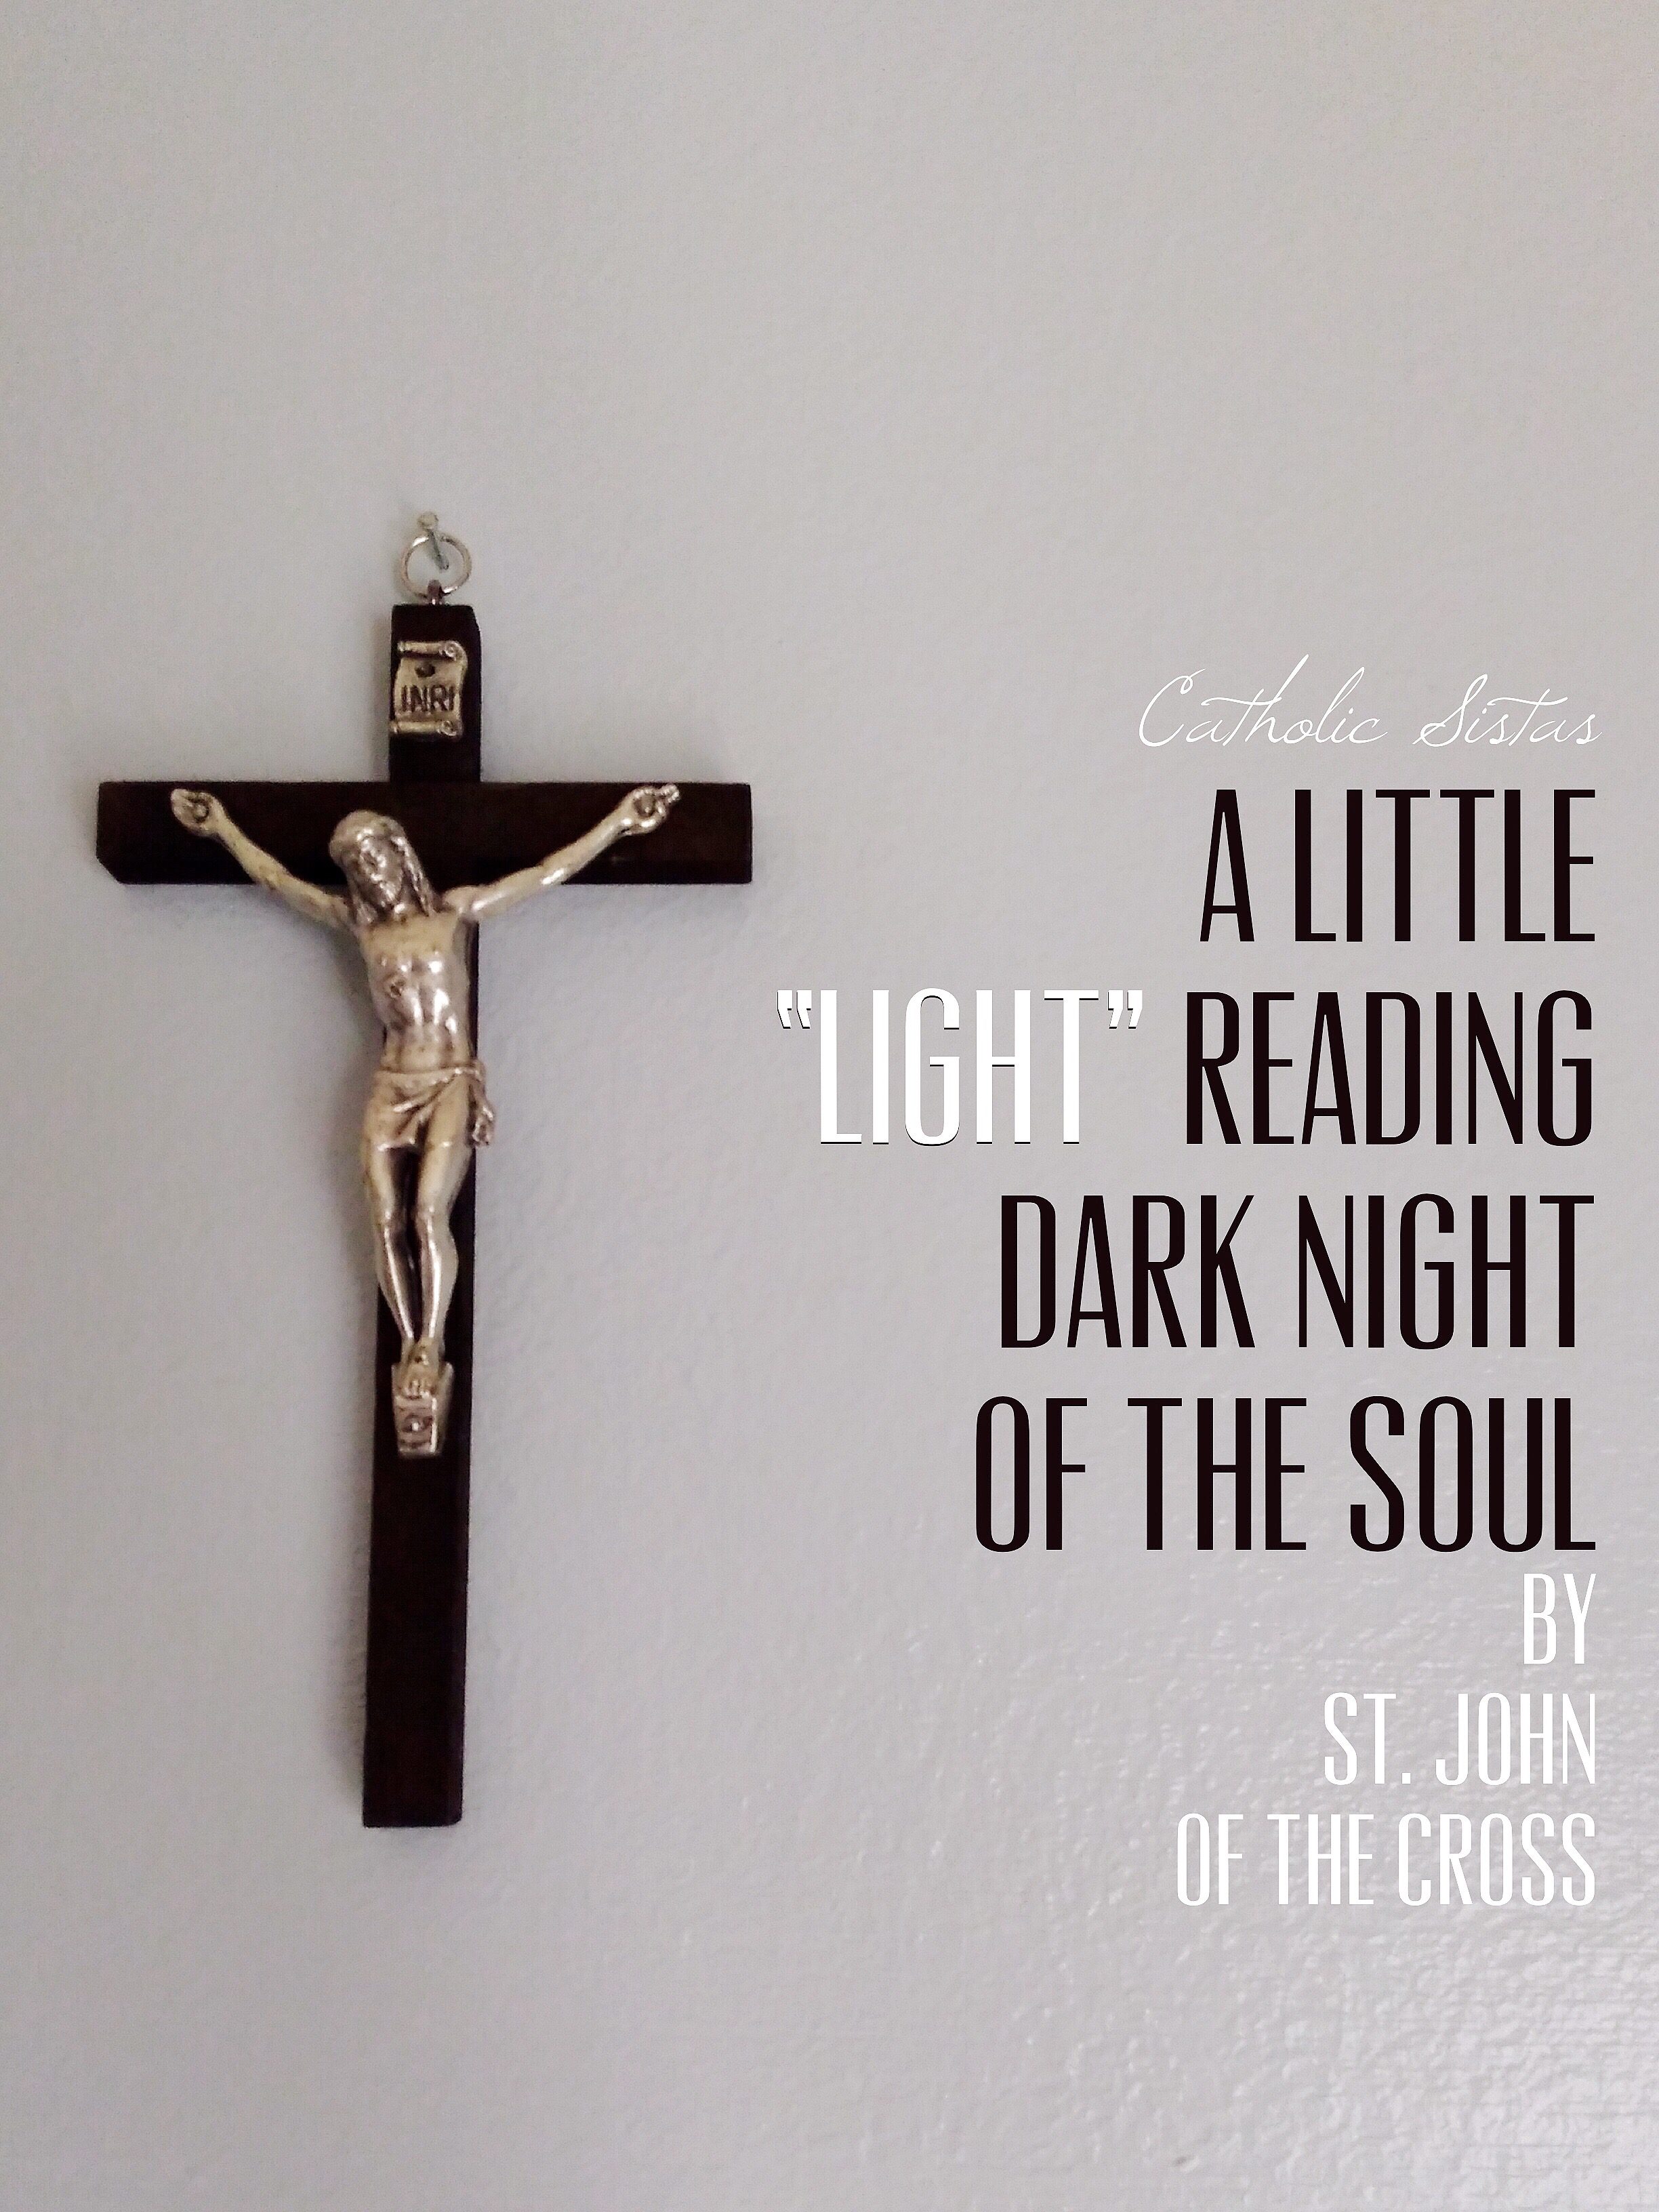 A Little “Light” Reading: Dark Night of the Soul by St. John of the Cross